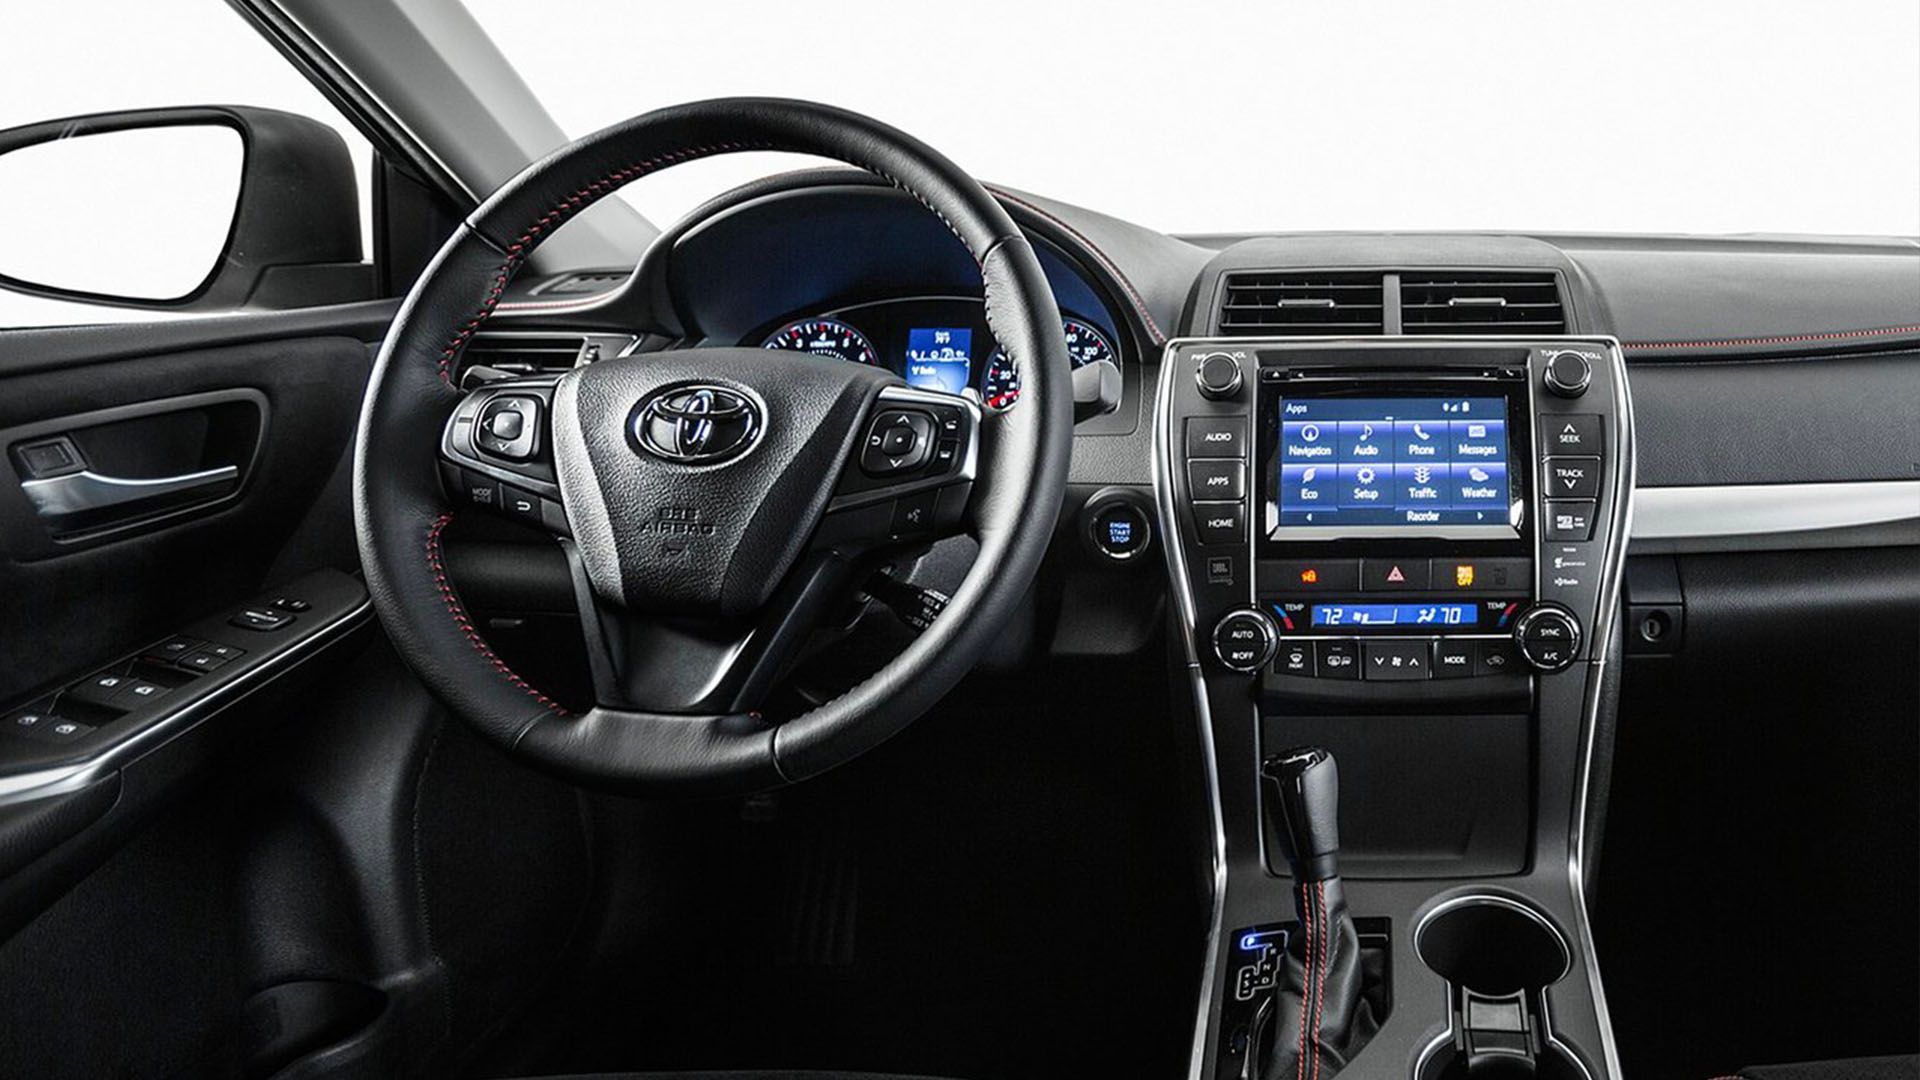 2017 Toyota Camry dashboard interior